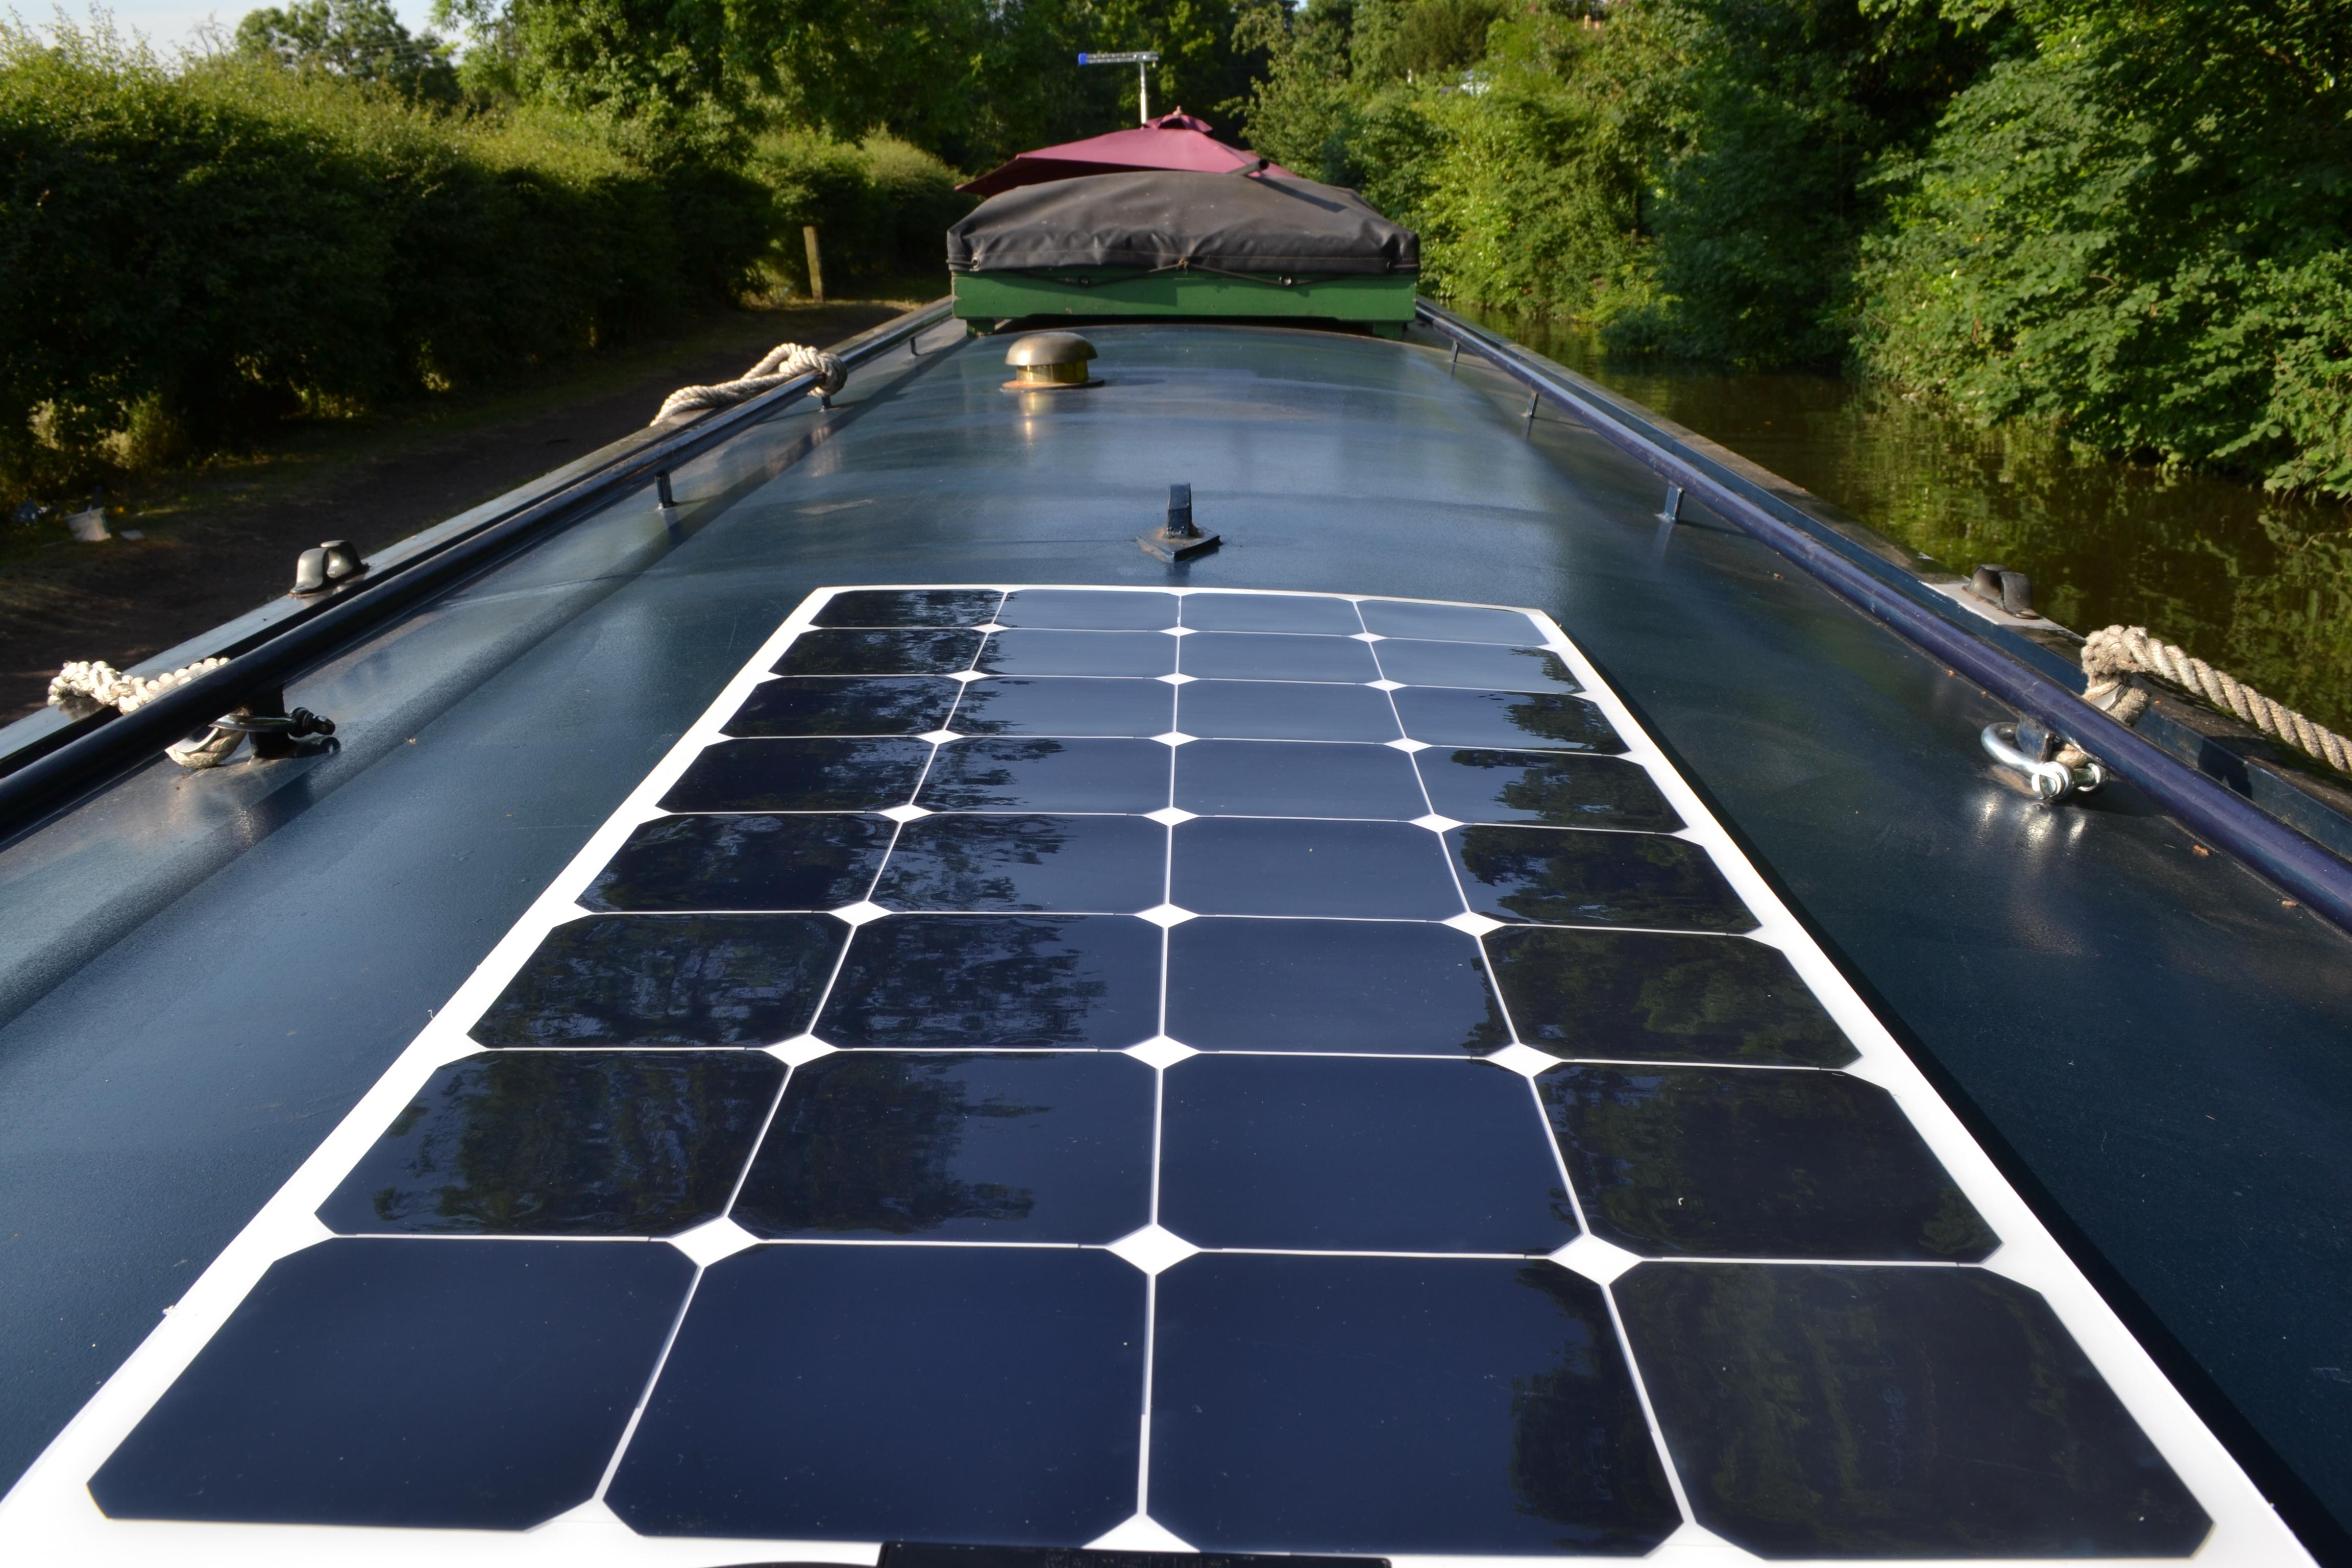 Flexible Monocrystalline Solar Panel (120W) FLEX-120